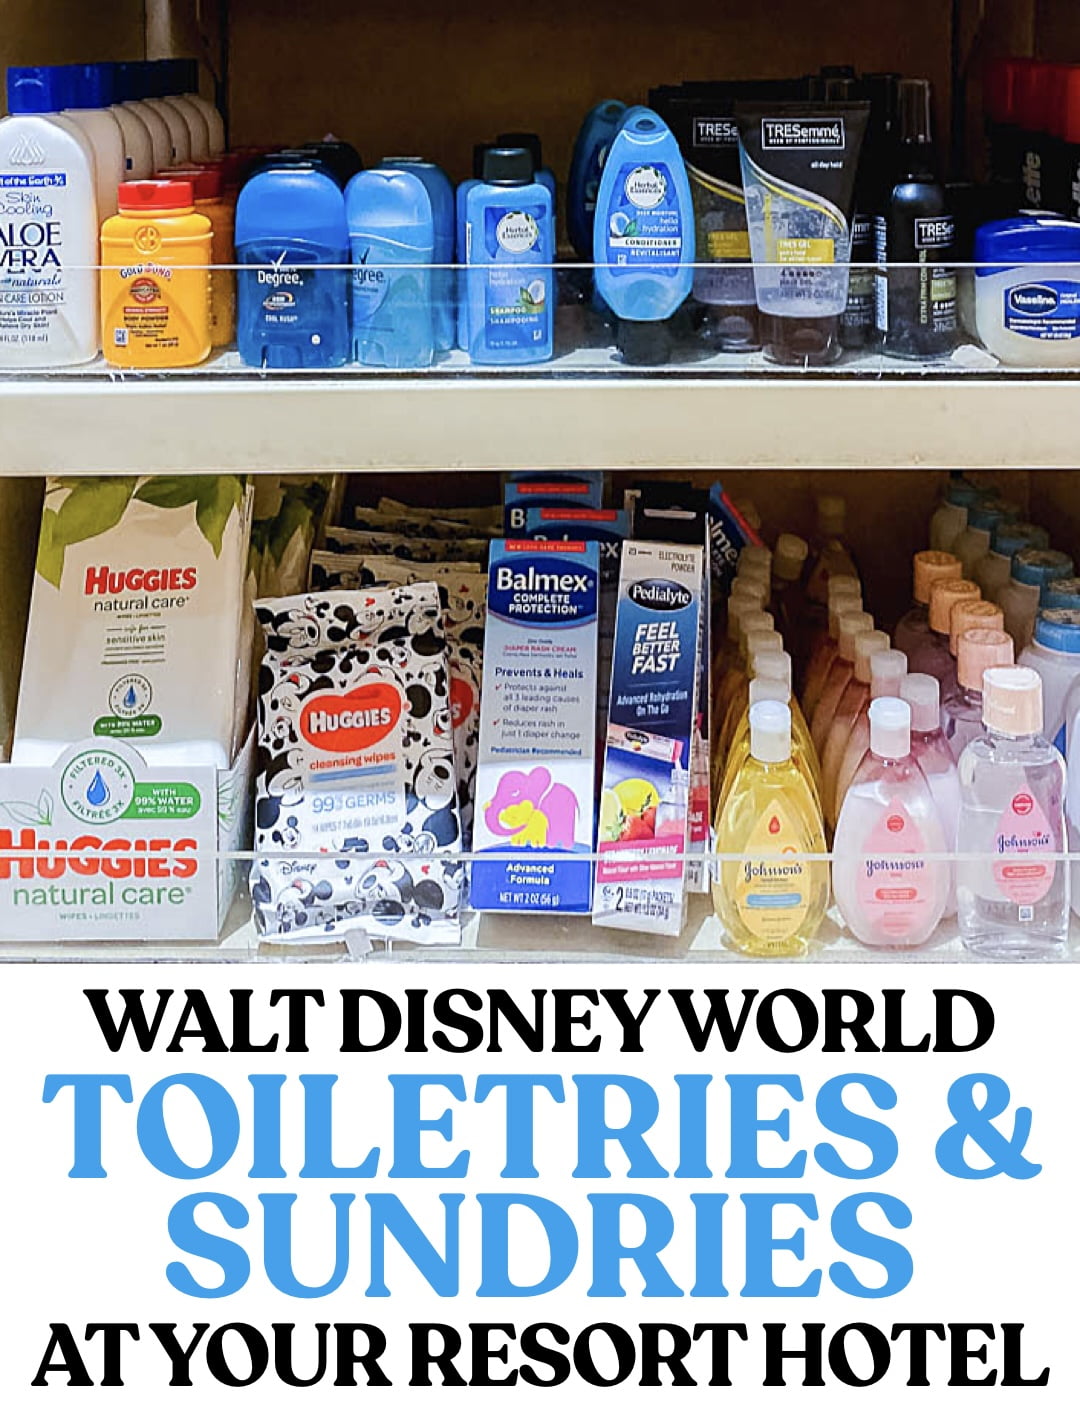 Toiletries & Sundries in Walt Disney World Resort Shops BRB Going to